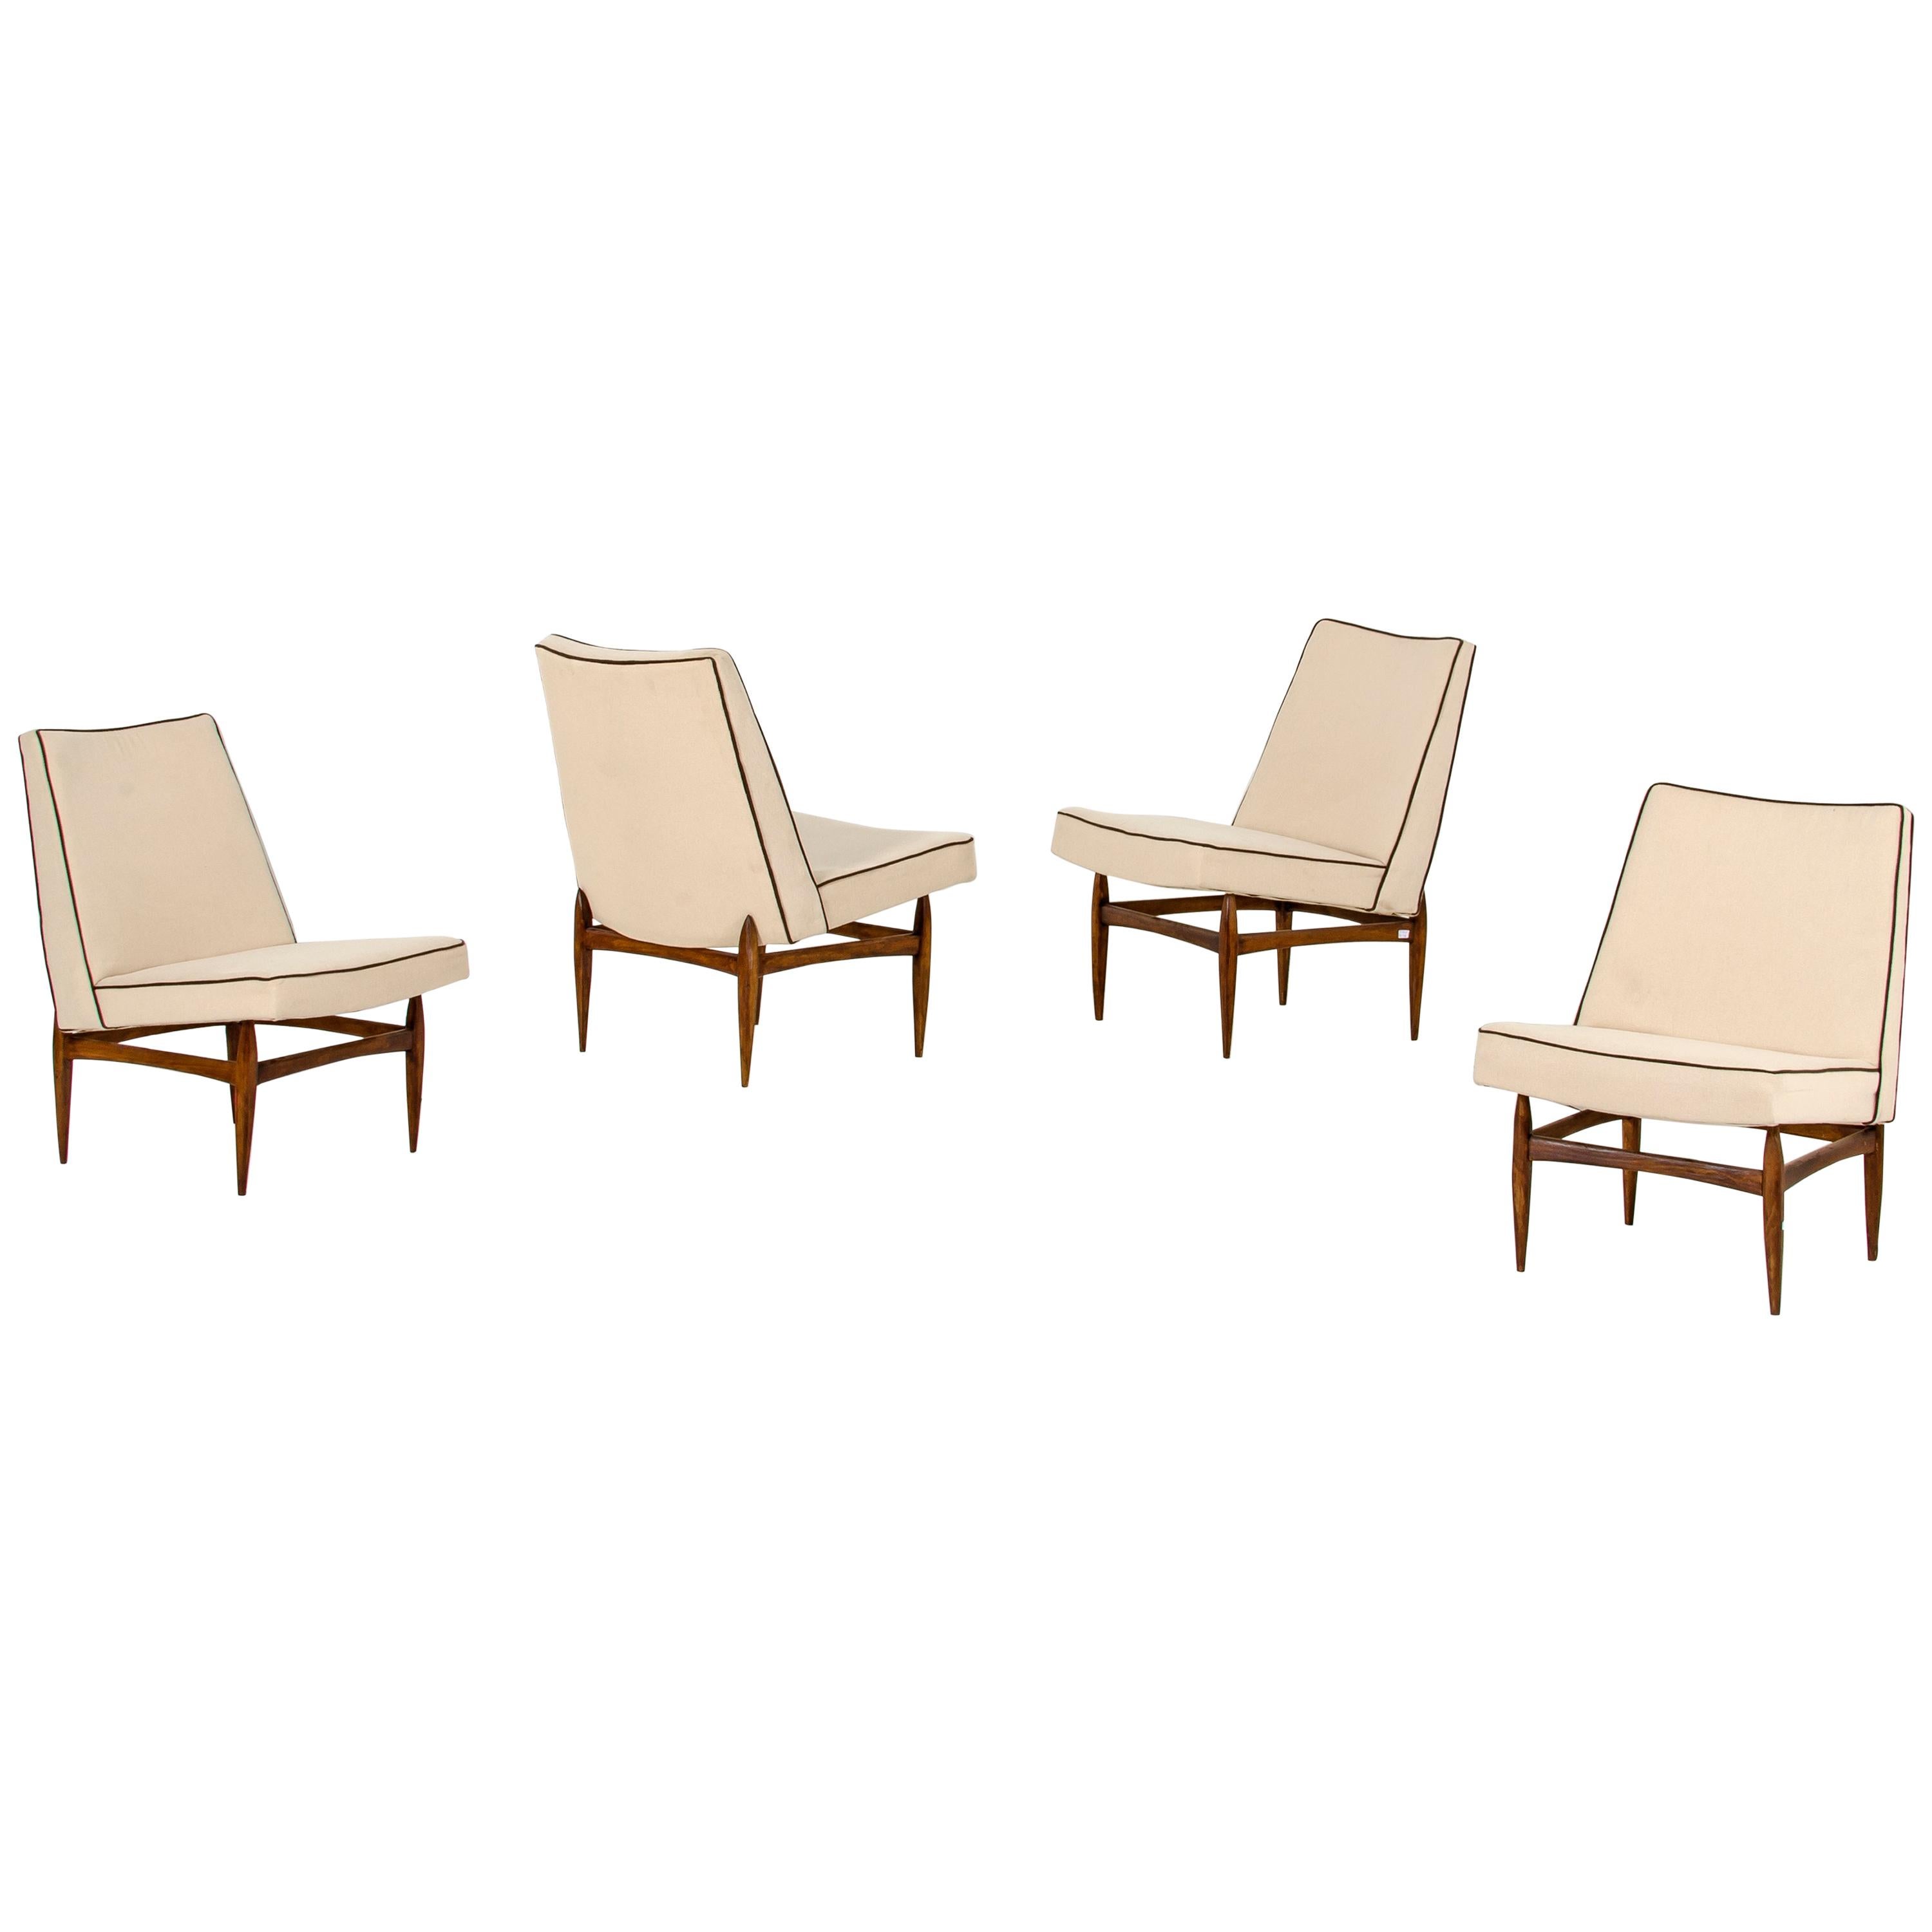 Four "Easy" Chairs by Italian Designer Giovanni Benzo, circa 1950